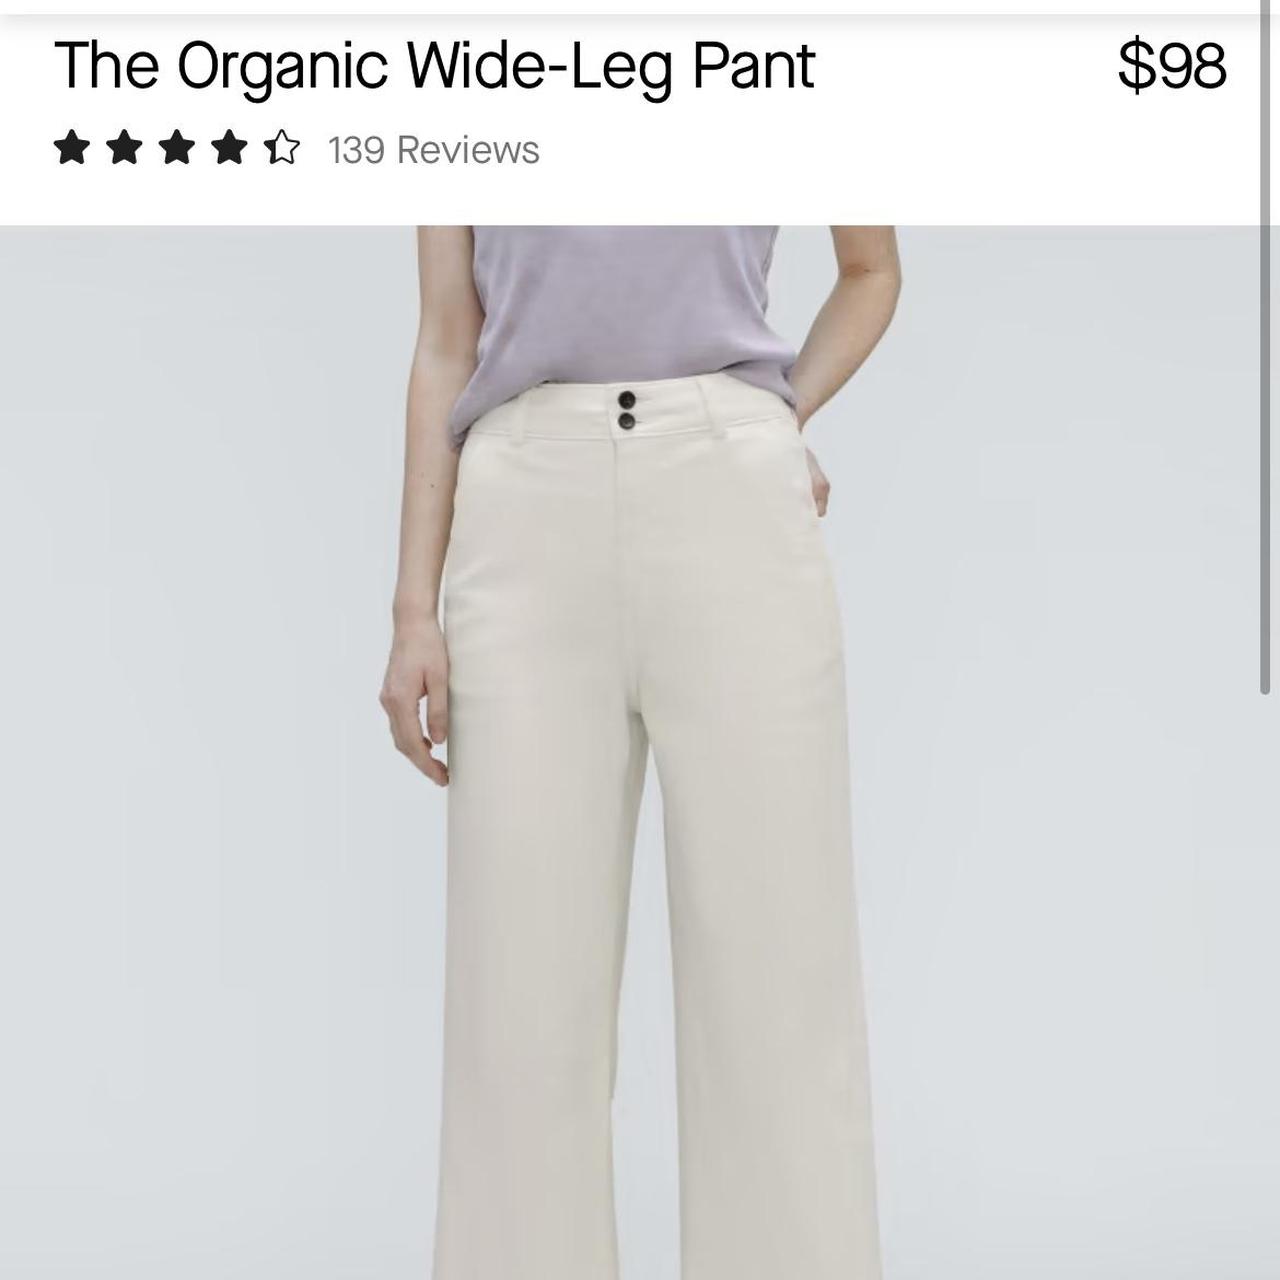 The Organic Wide-Leg Pant